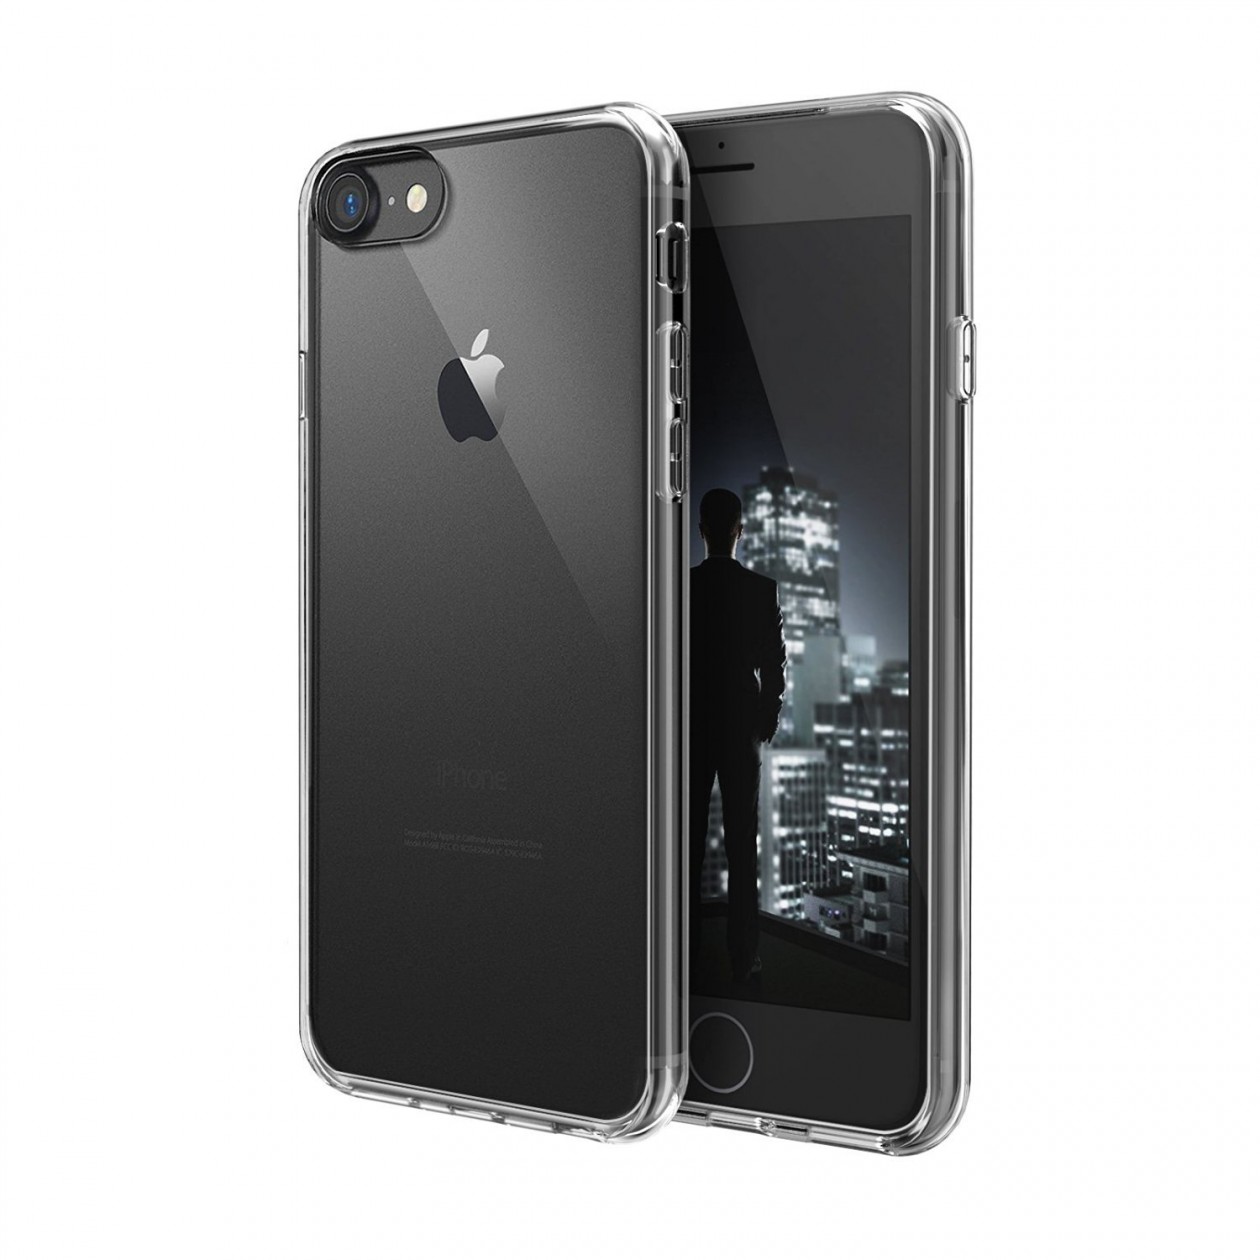 Rheme iPhone 8 iPhone 7 Case, Crystal Clear PC Back TPU Protective Cover